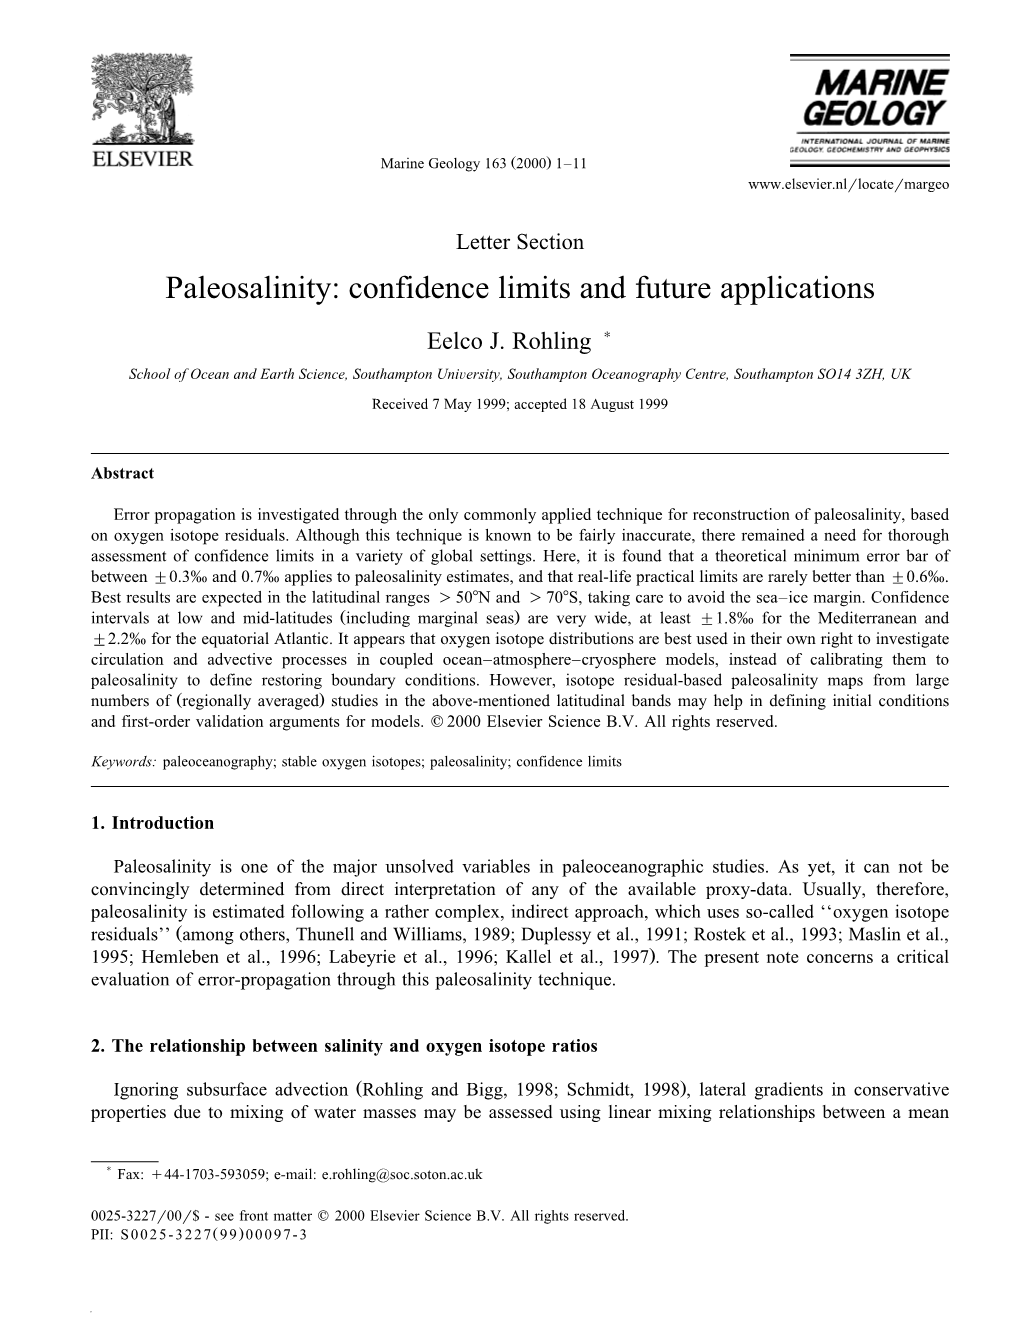 Paleosalinity: Confidence Limits and Future Applications